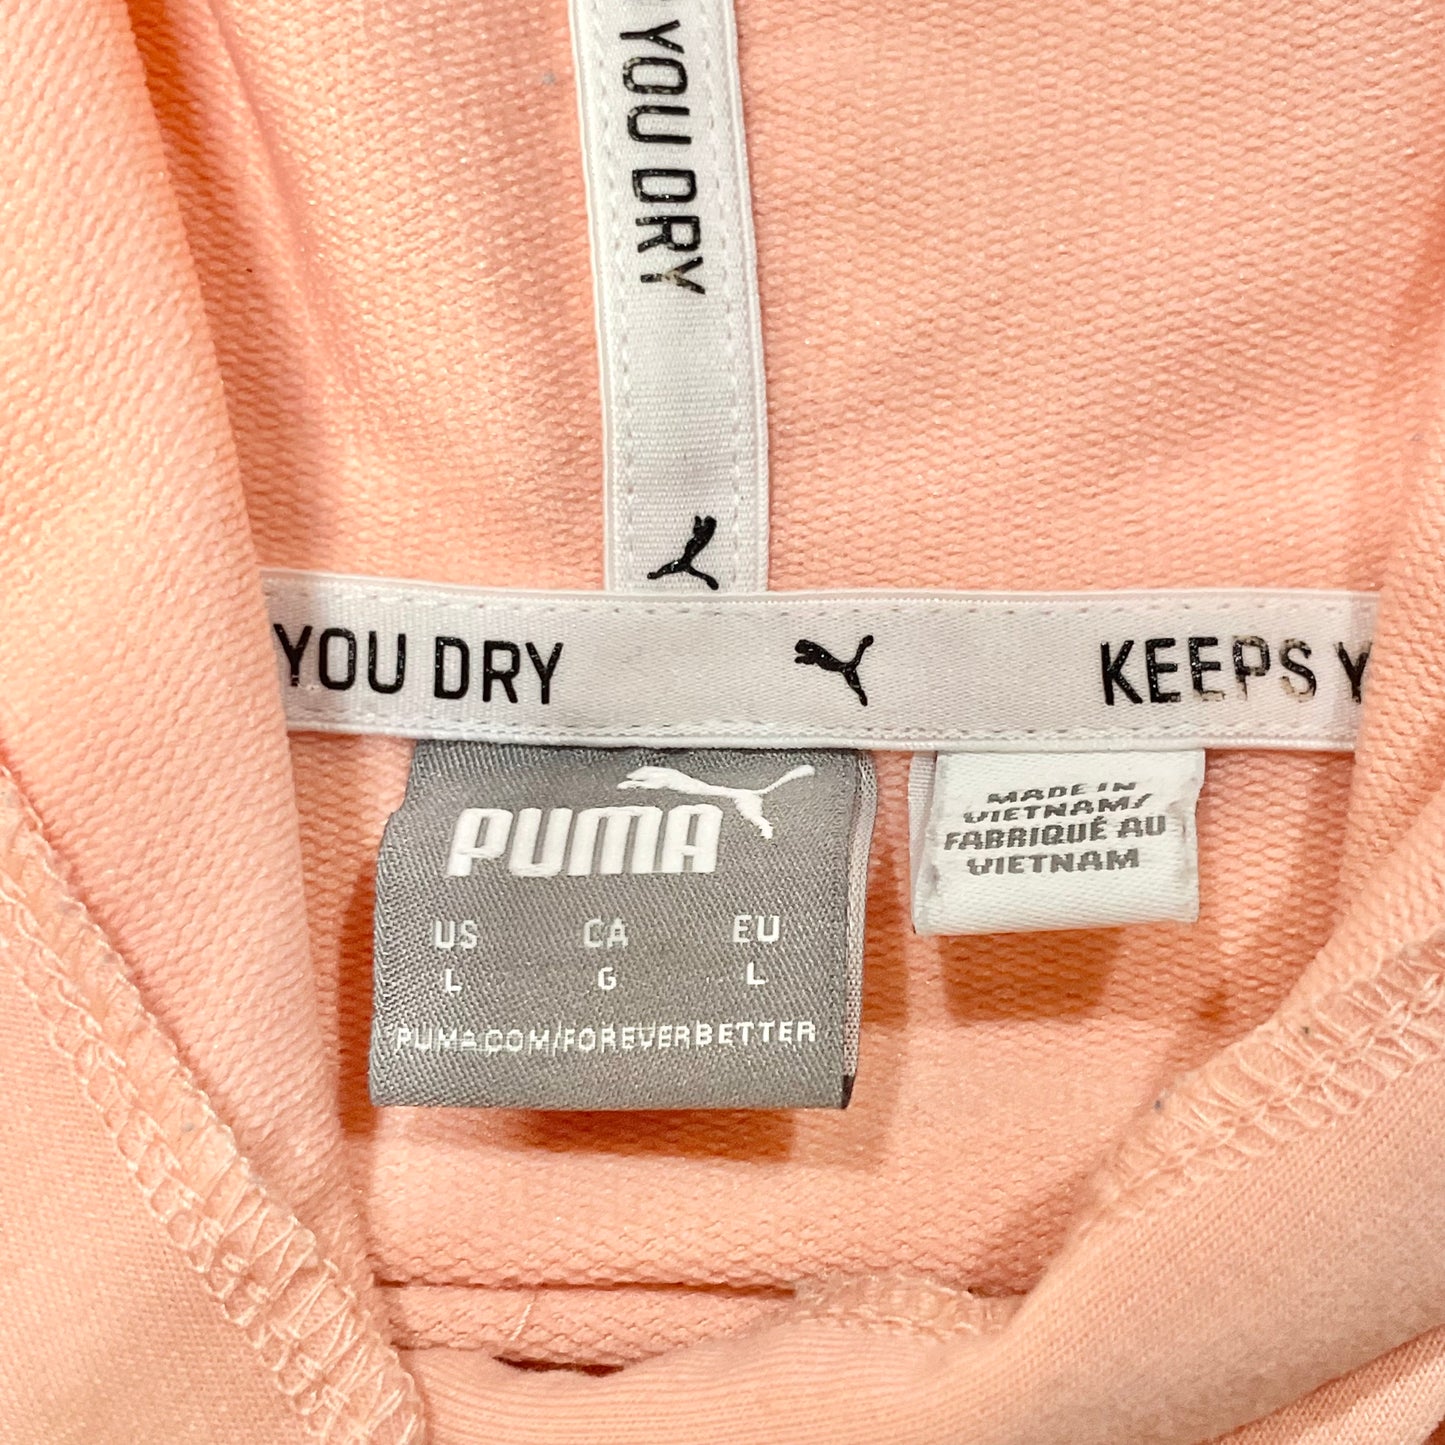 Sweatshirt Hoodie By Puma  Size: L